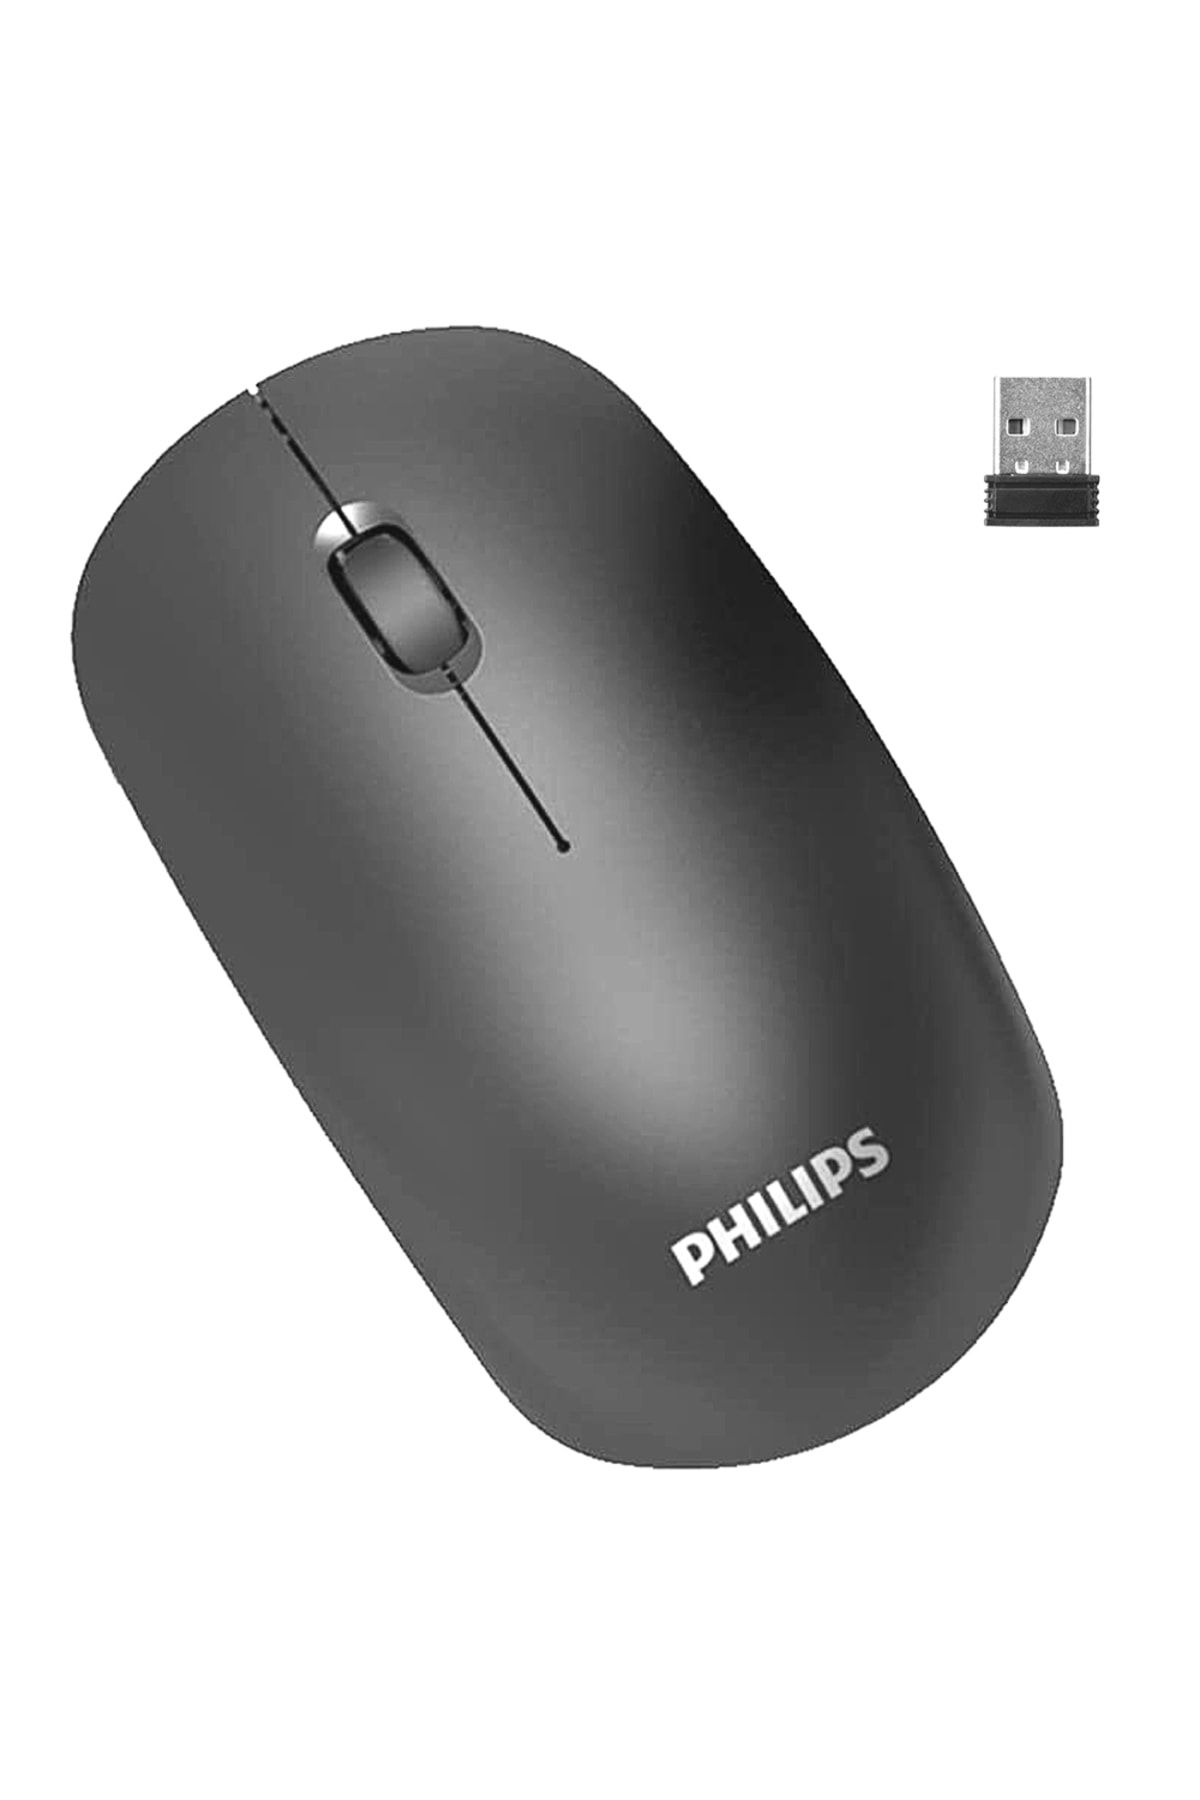 Philips Spk7315/00 M315 Siyah Wireless Kablosuz Sessiz Mouse 1200dpi